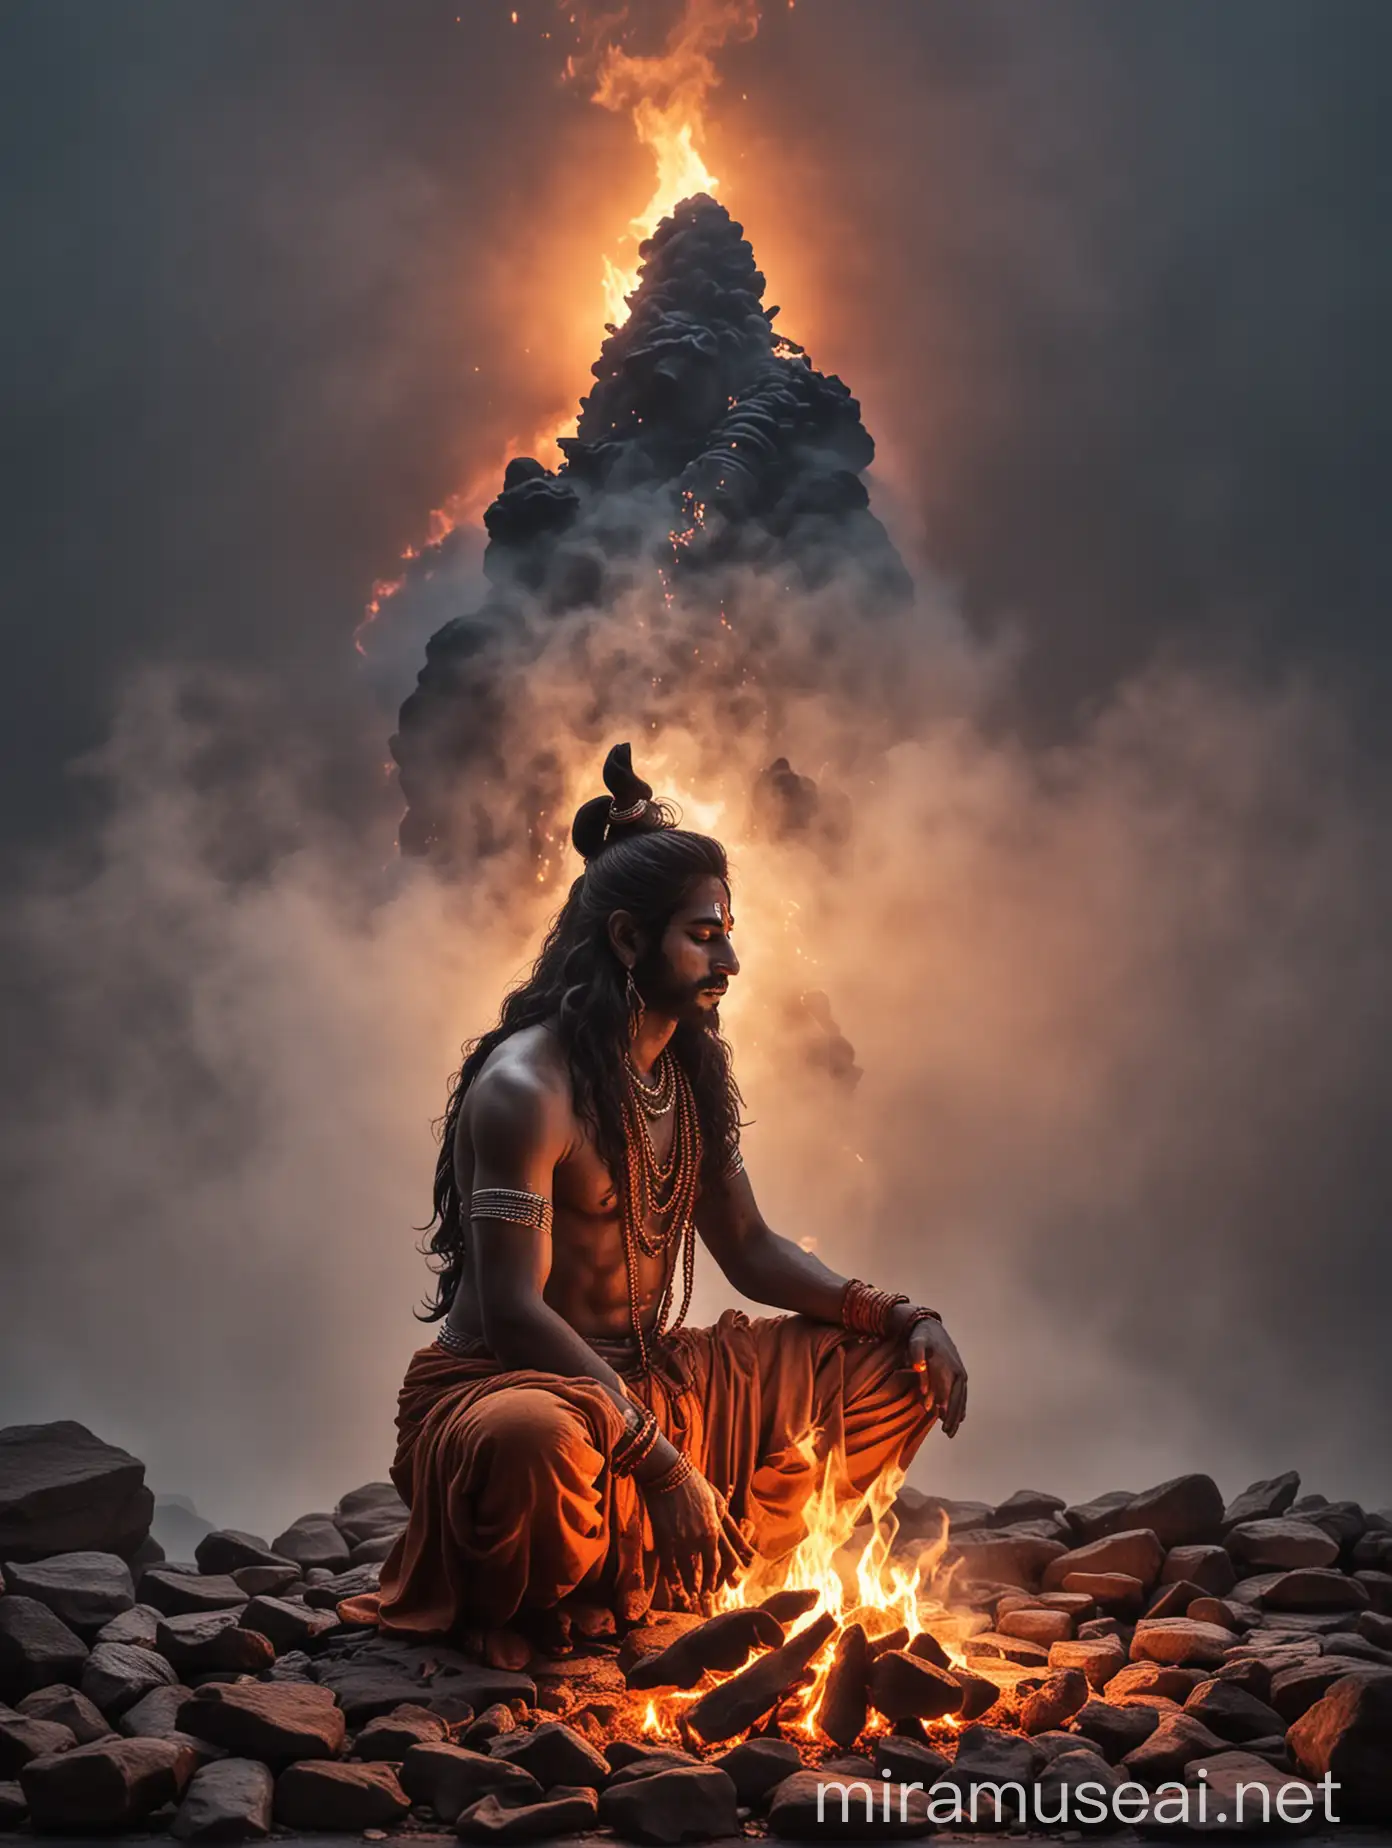 Hindu Men Praying to Mahadev Amidst a Foggy Fire Background